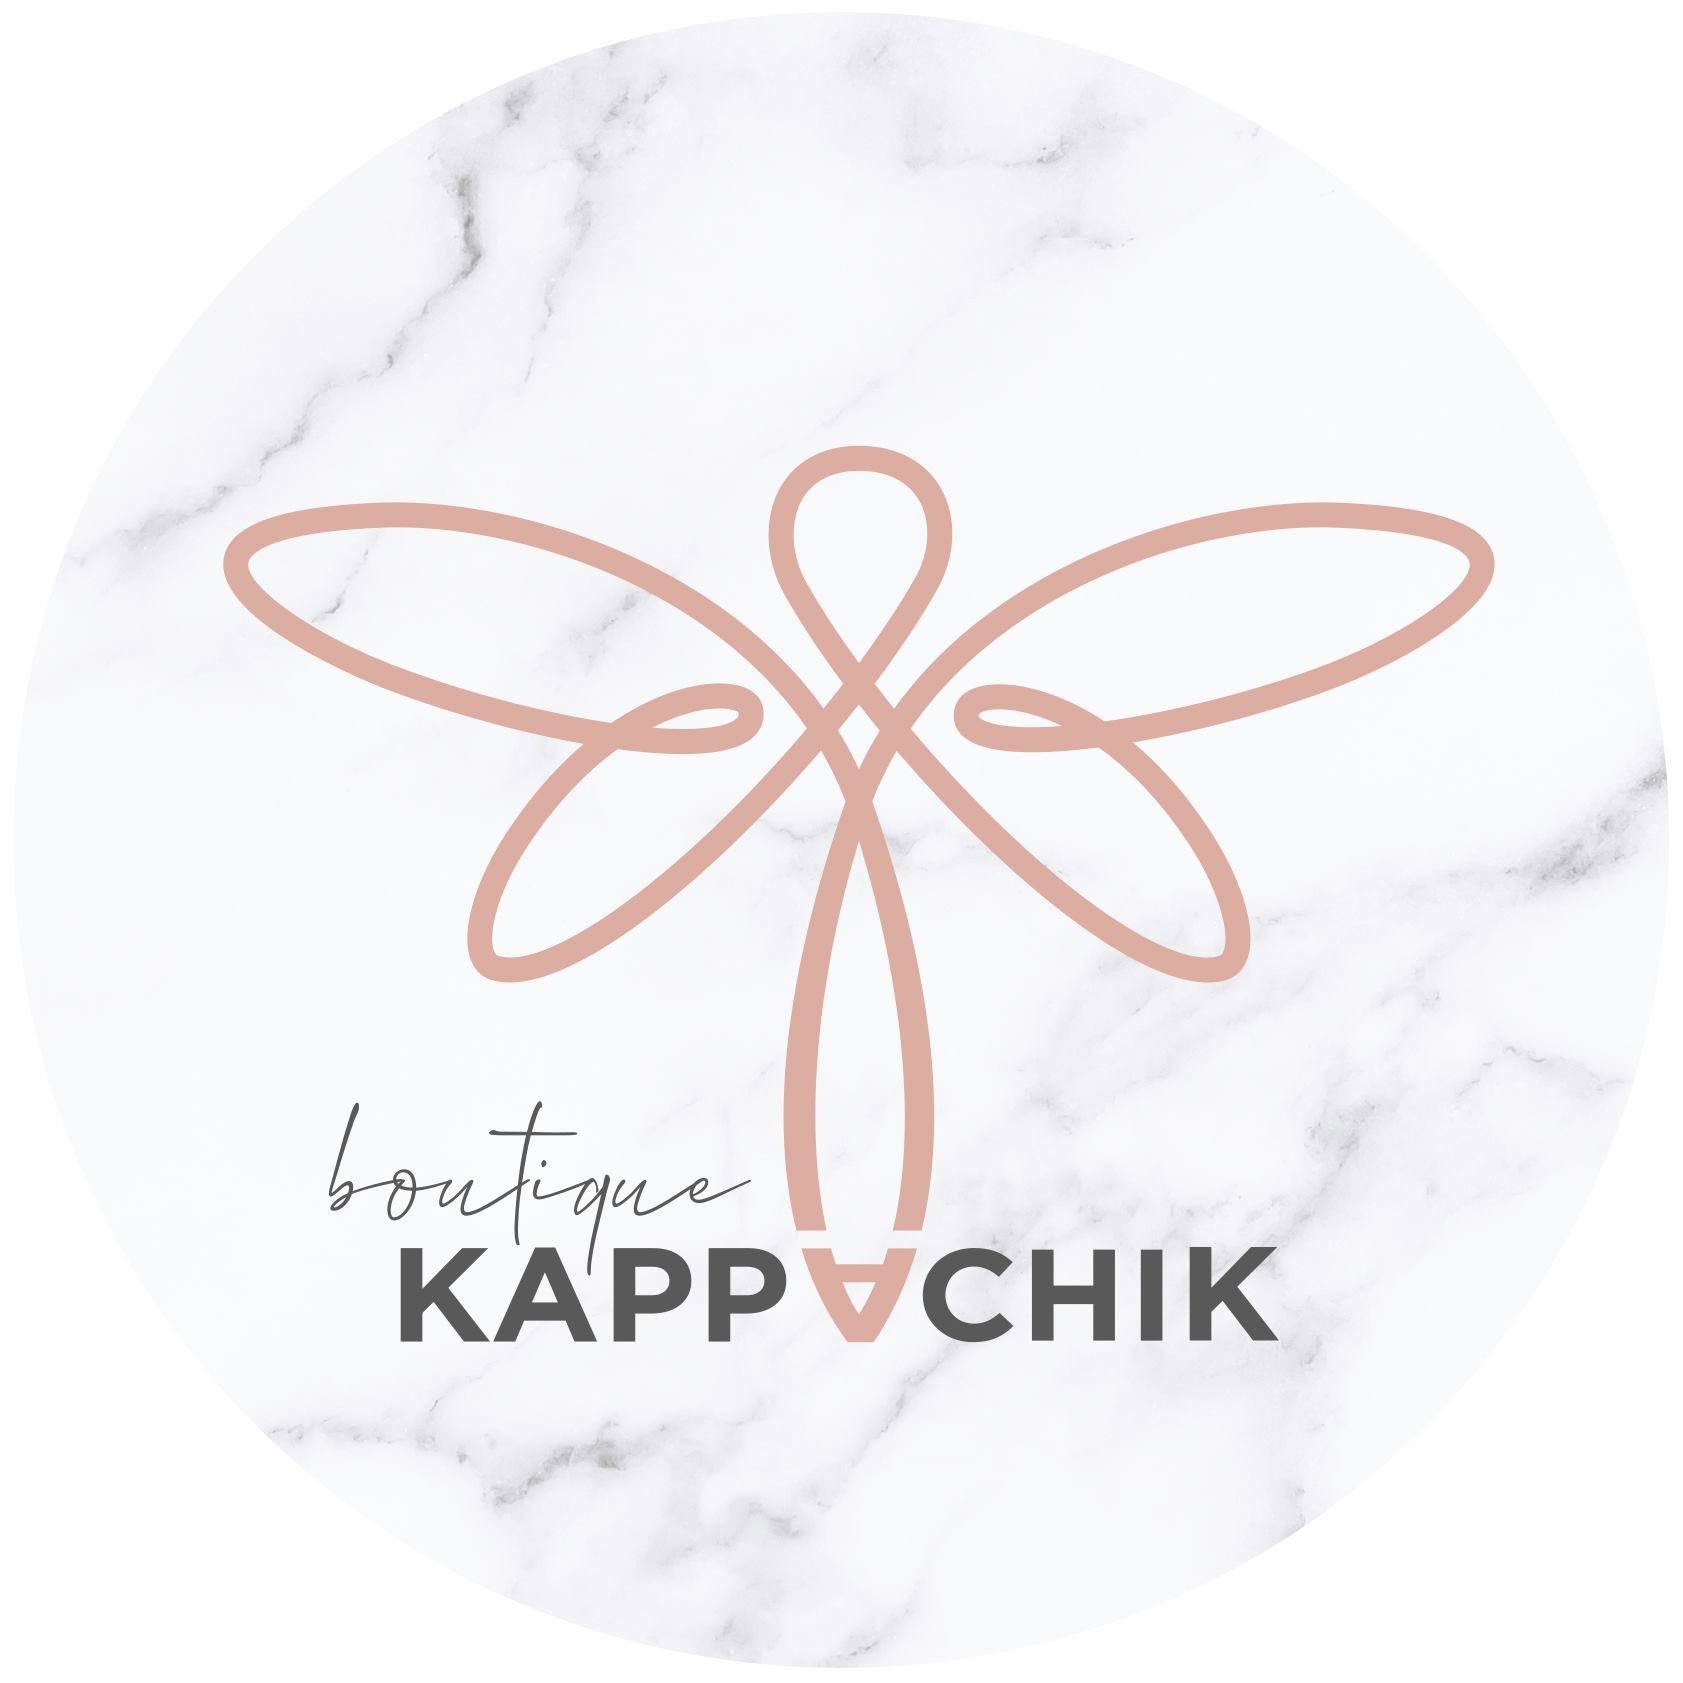 Boutique Kappachik